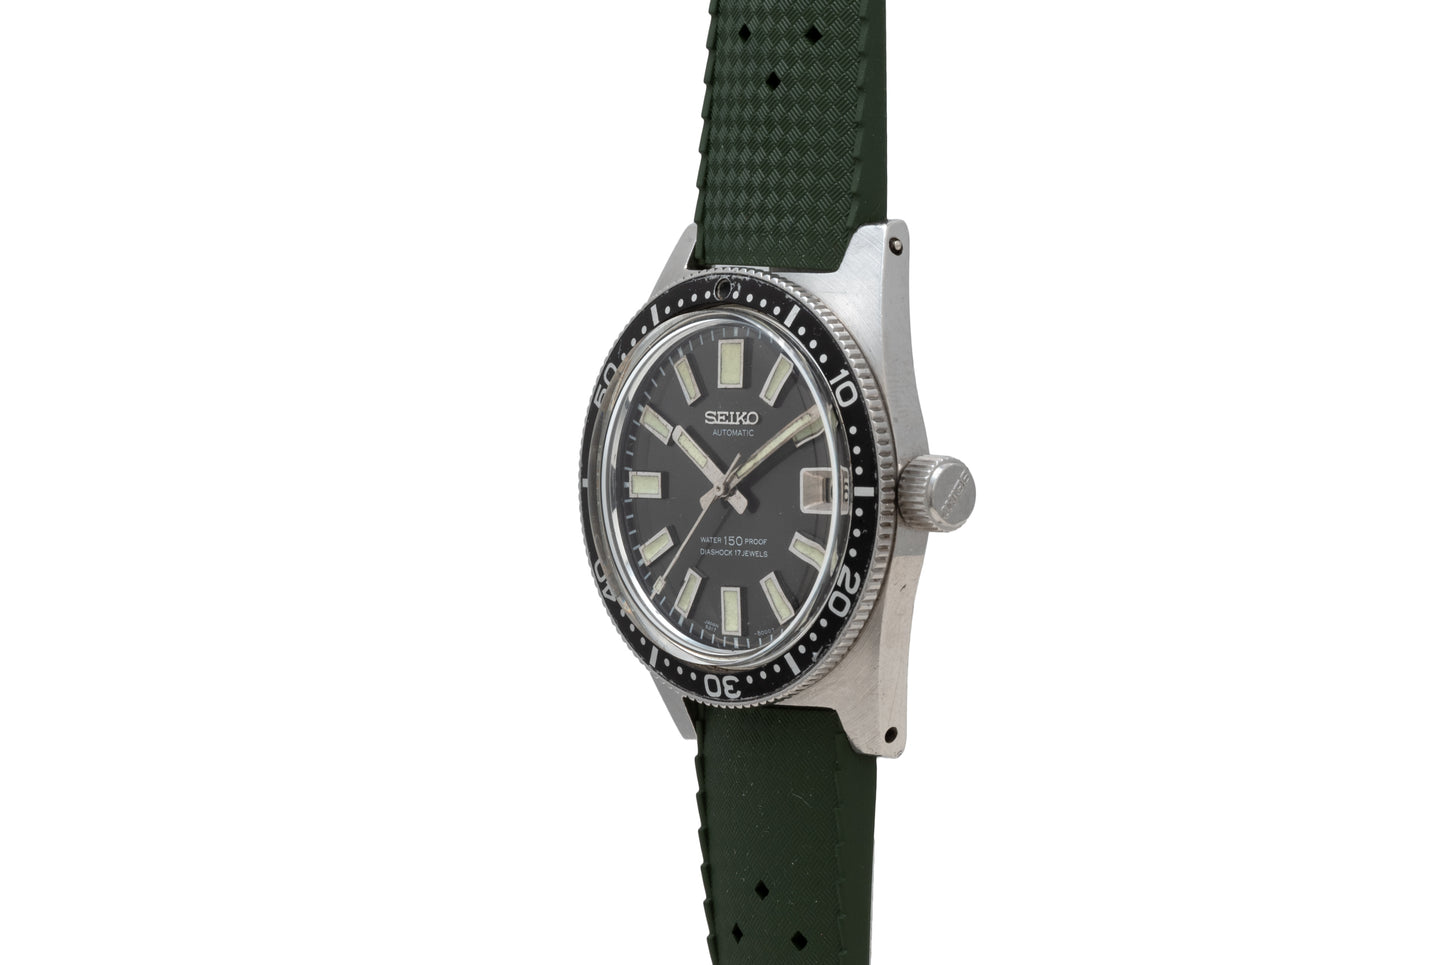 Seiko 62MAS Diver's Watch 'Big Crown'